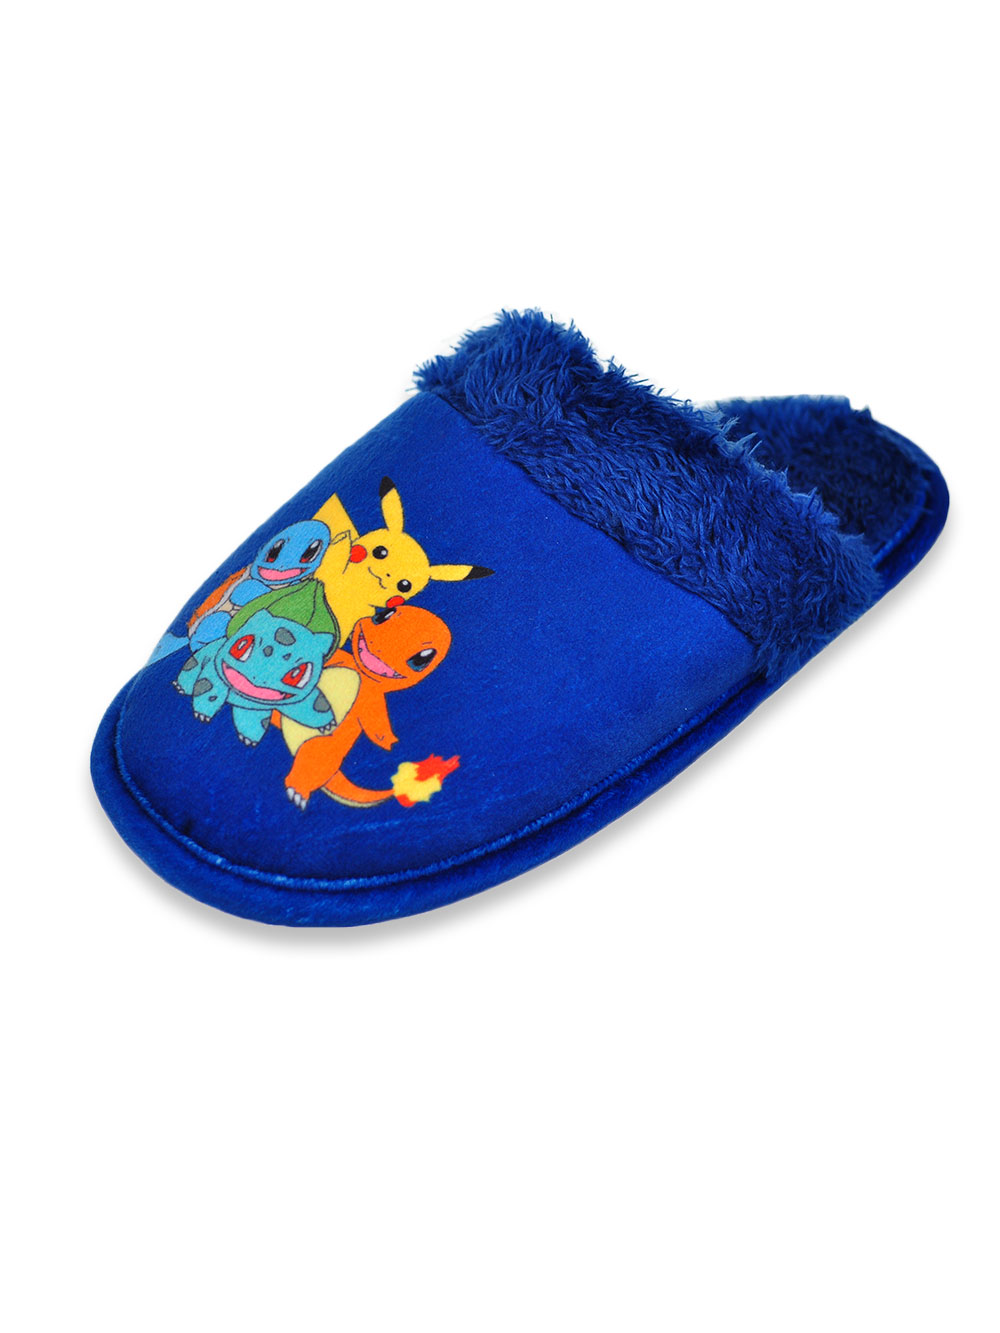 Boys' Pikachu Slippers